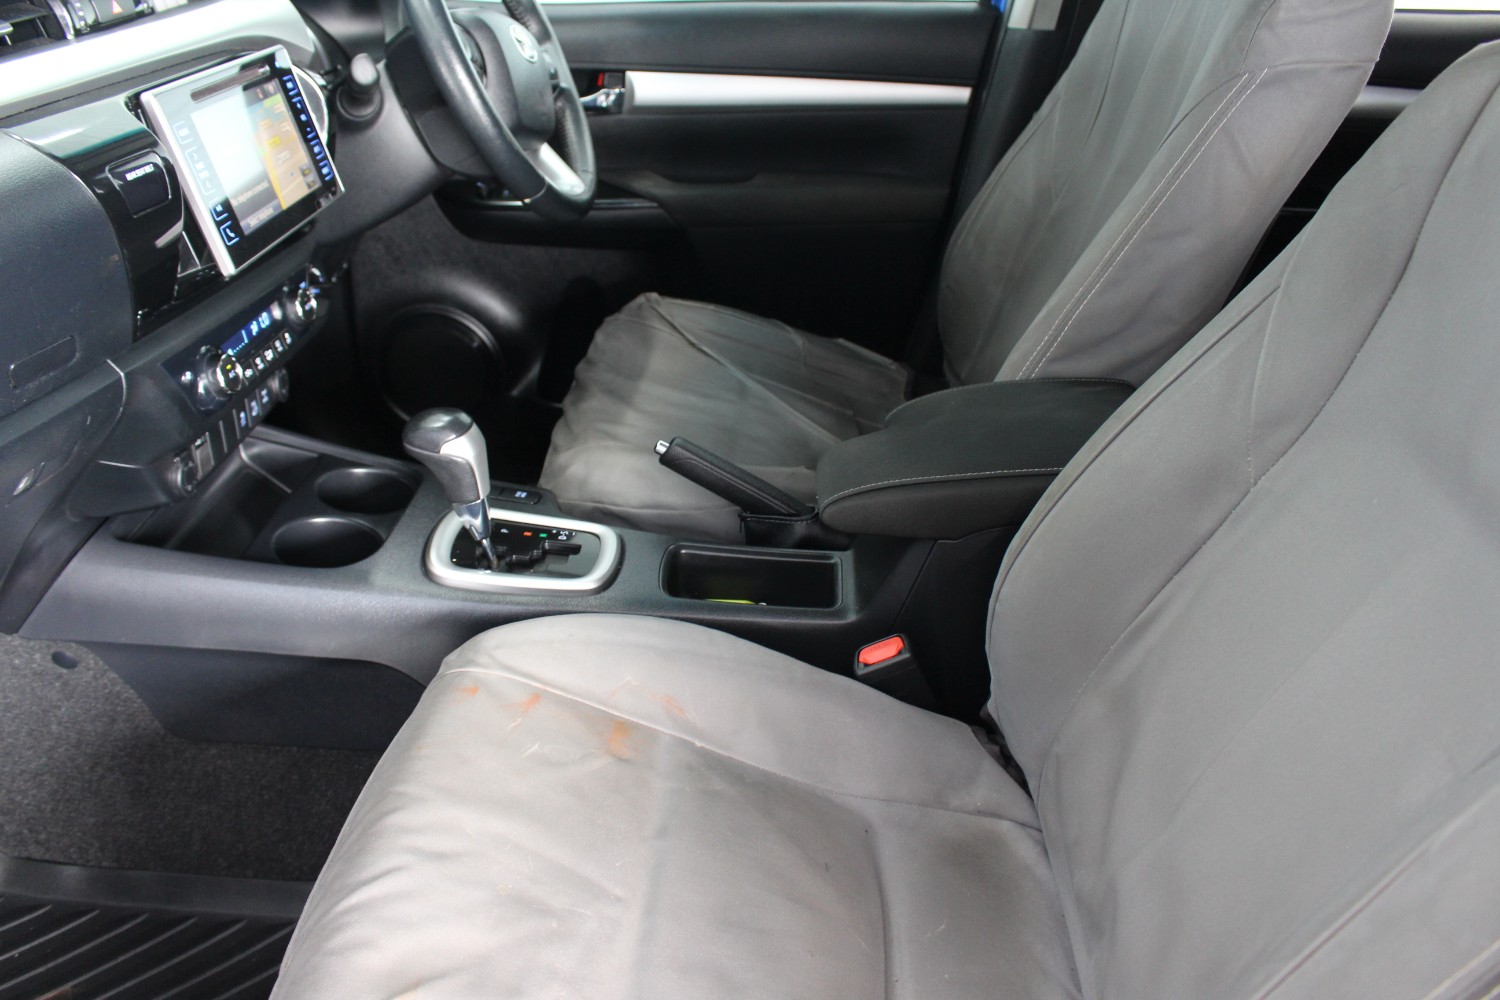 2015 MY16 Toyota HiLux SR5 4x4 Double-Cab Pick-Up Dual Cab Image 11